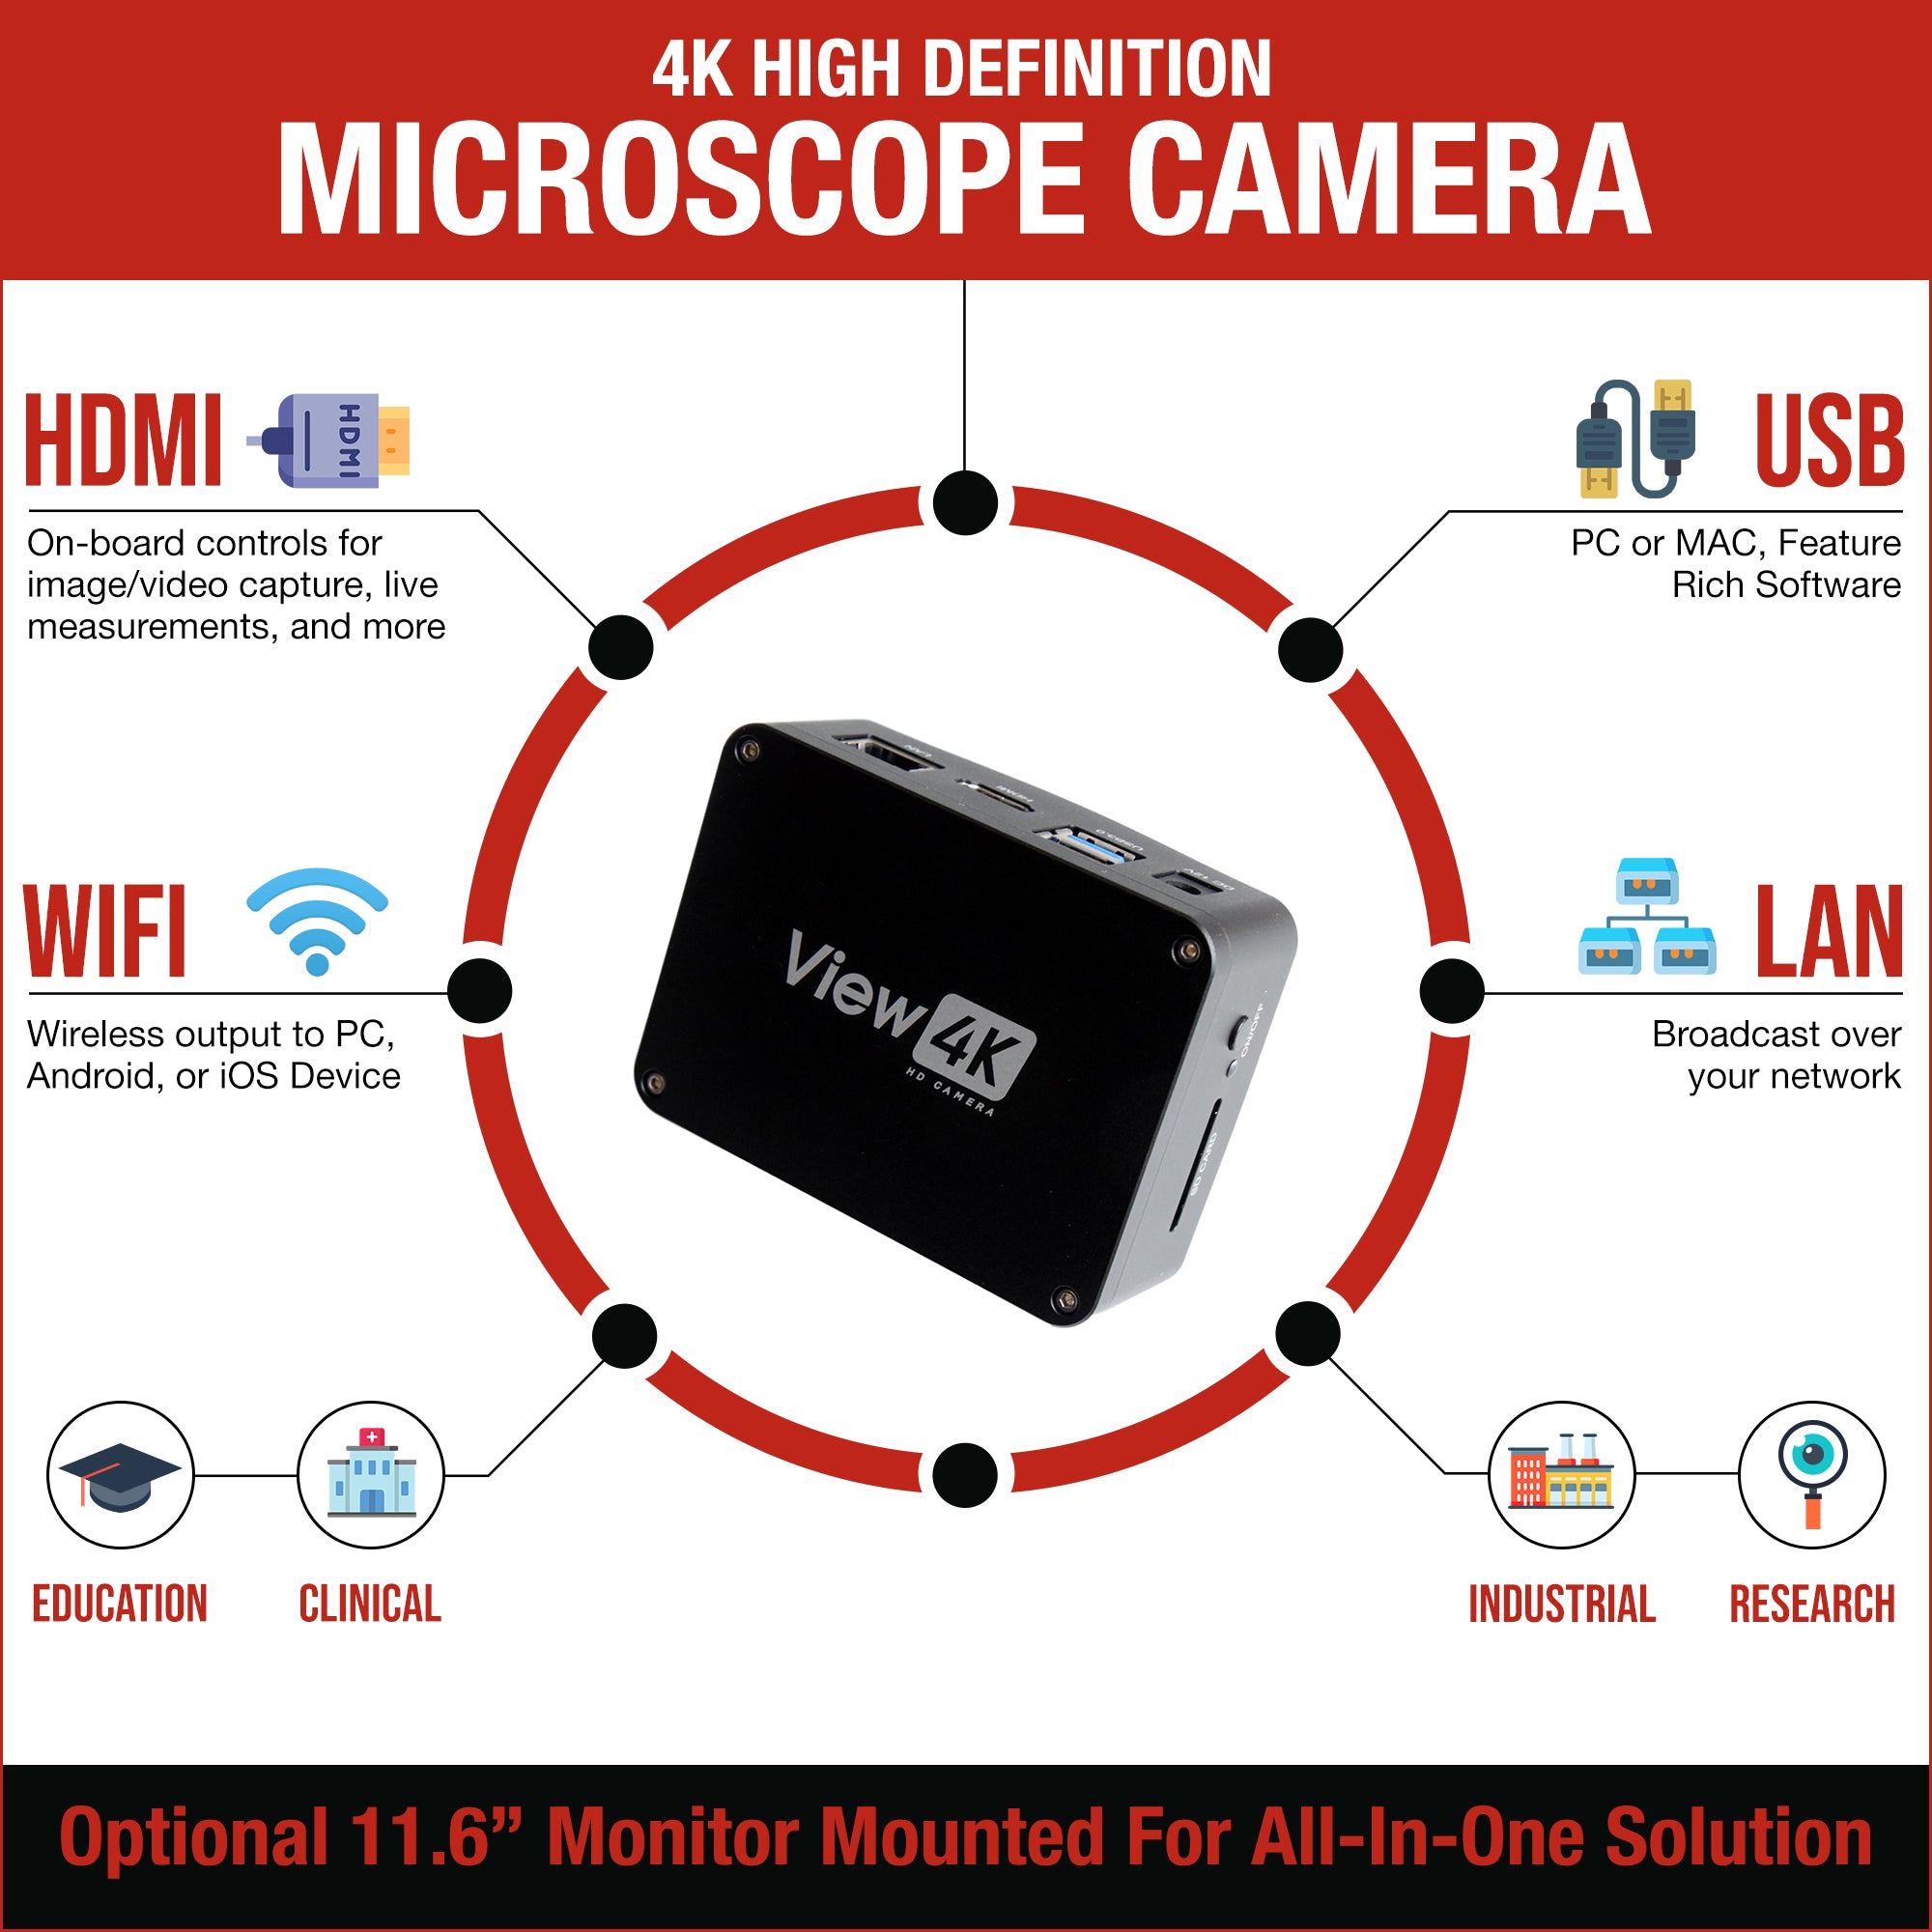 motor Selvforkælelse At søge tilflugt VIEW4K High Definition 4K HDMI, WiFi, USB Microscope Camera – Microscope  Central